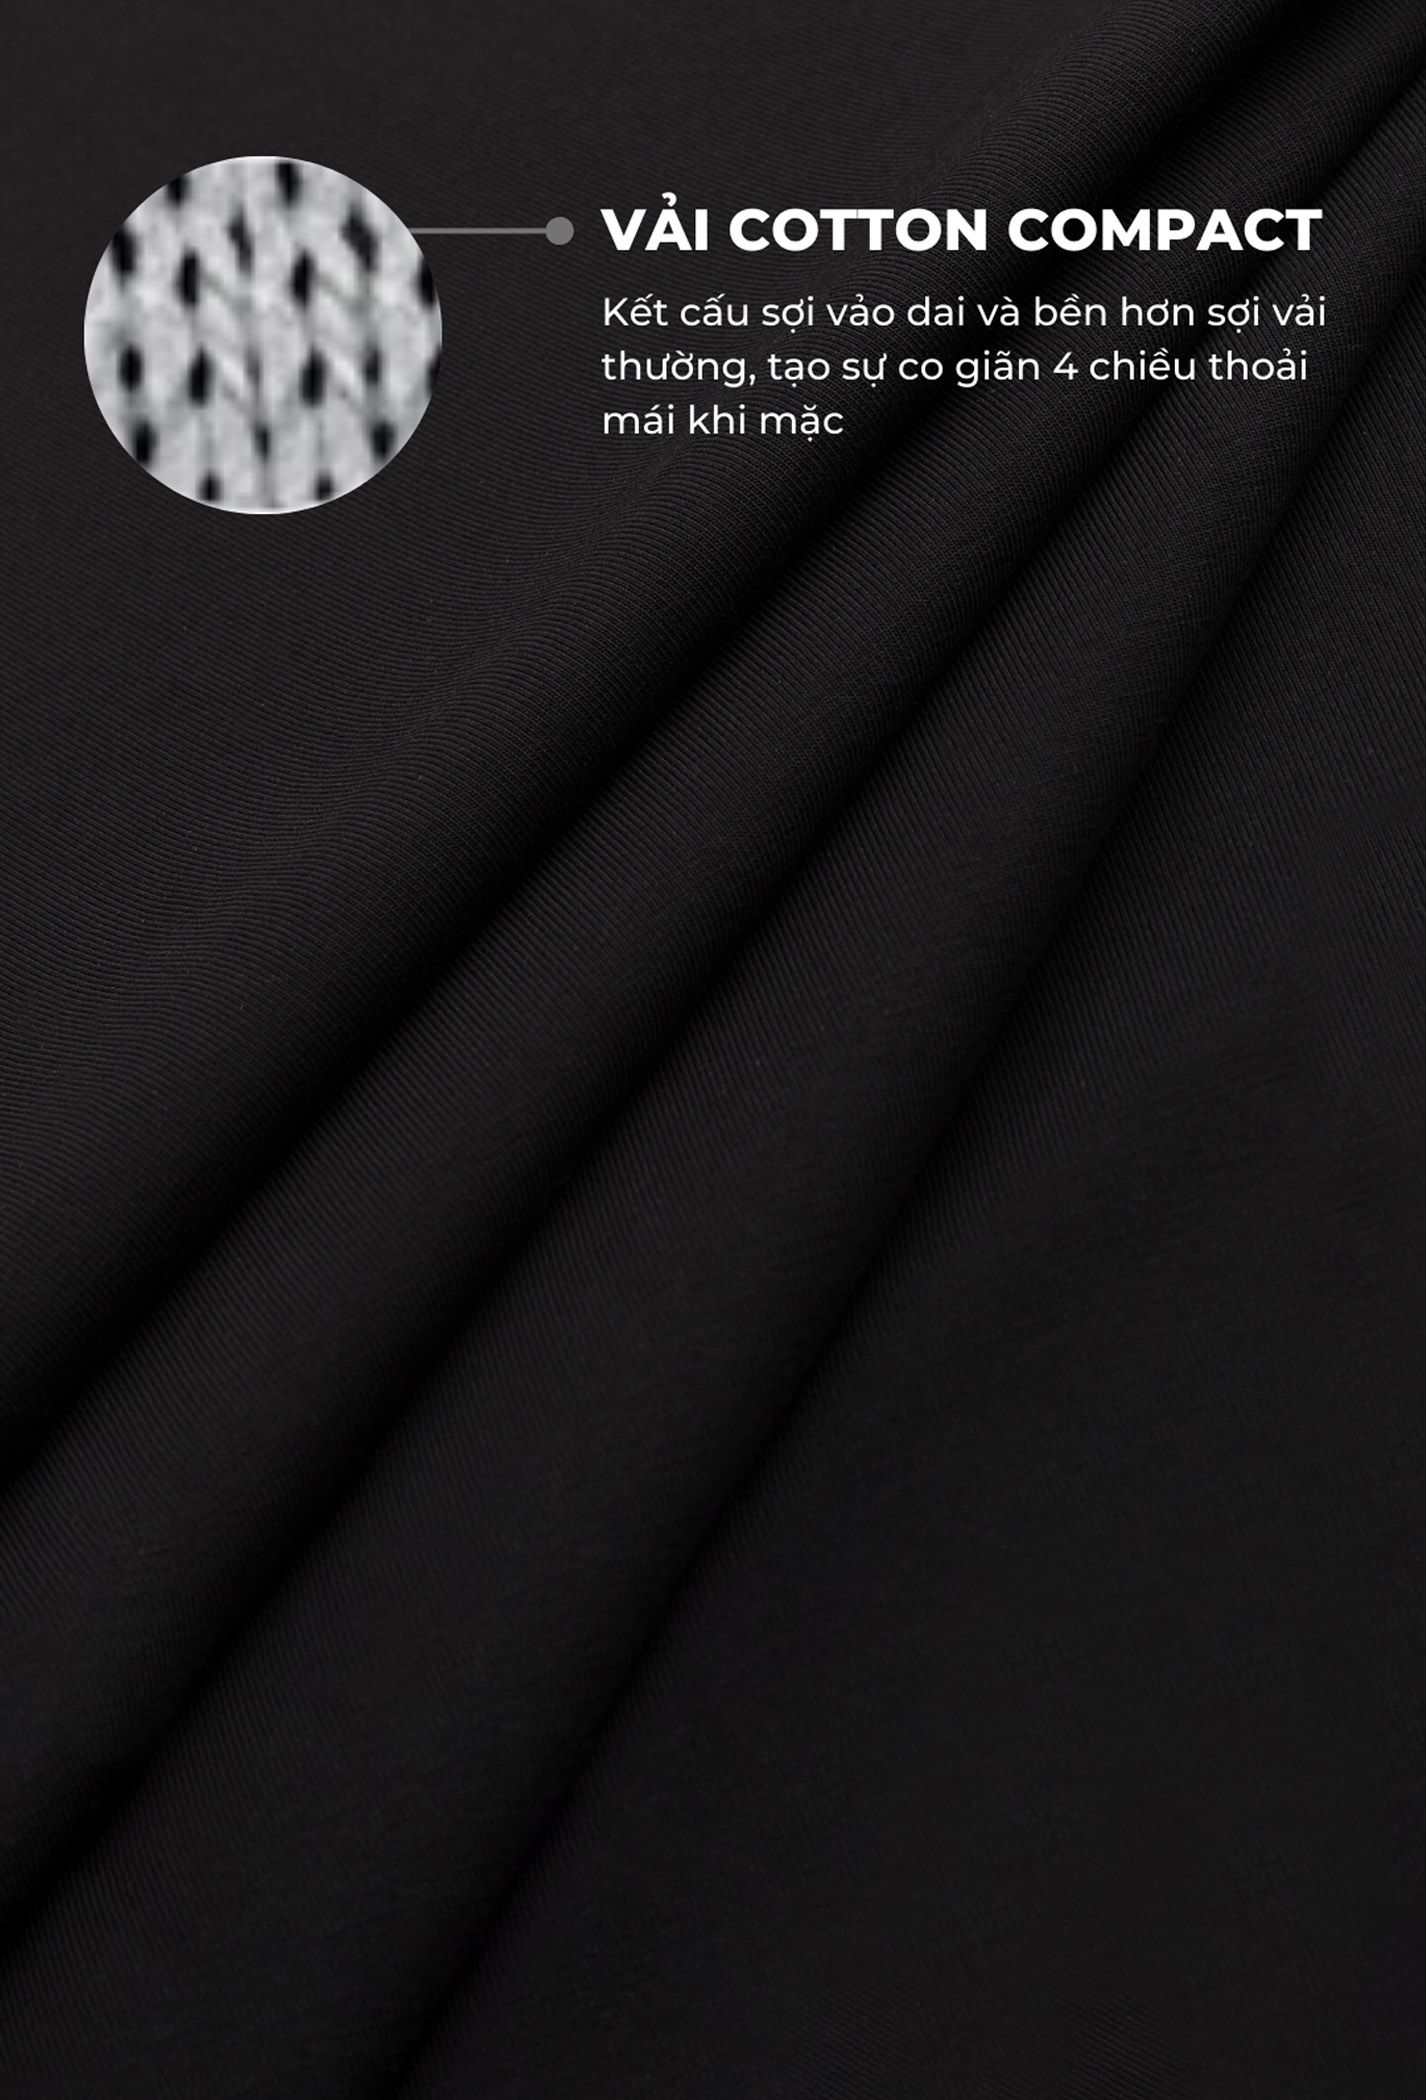 Áo thun Cotton Compact in "I AM LIMITED" in phản quang - Màu đen  4